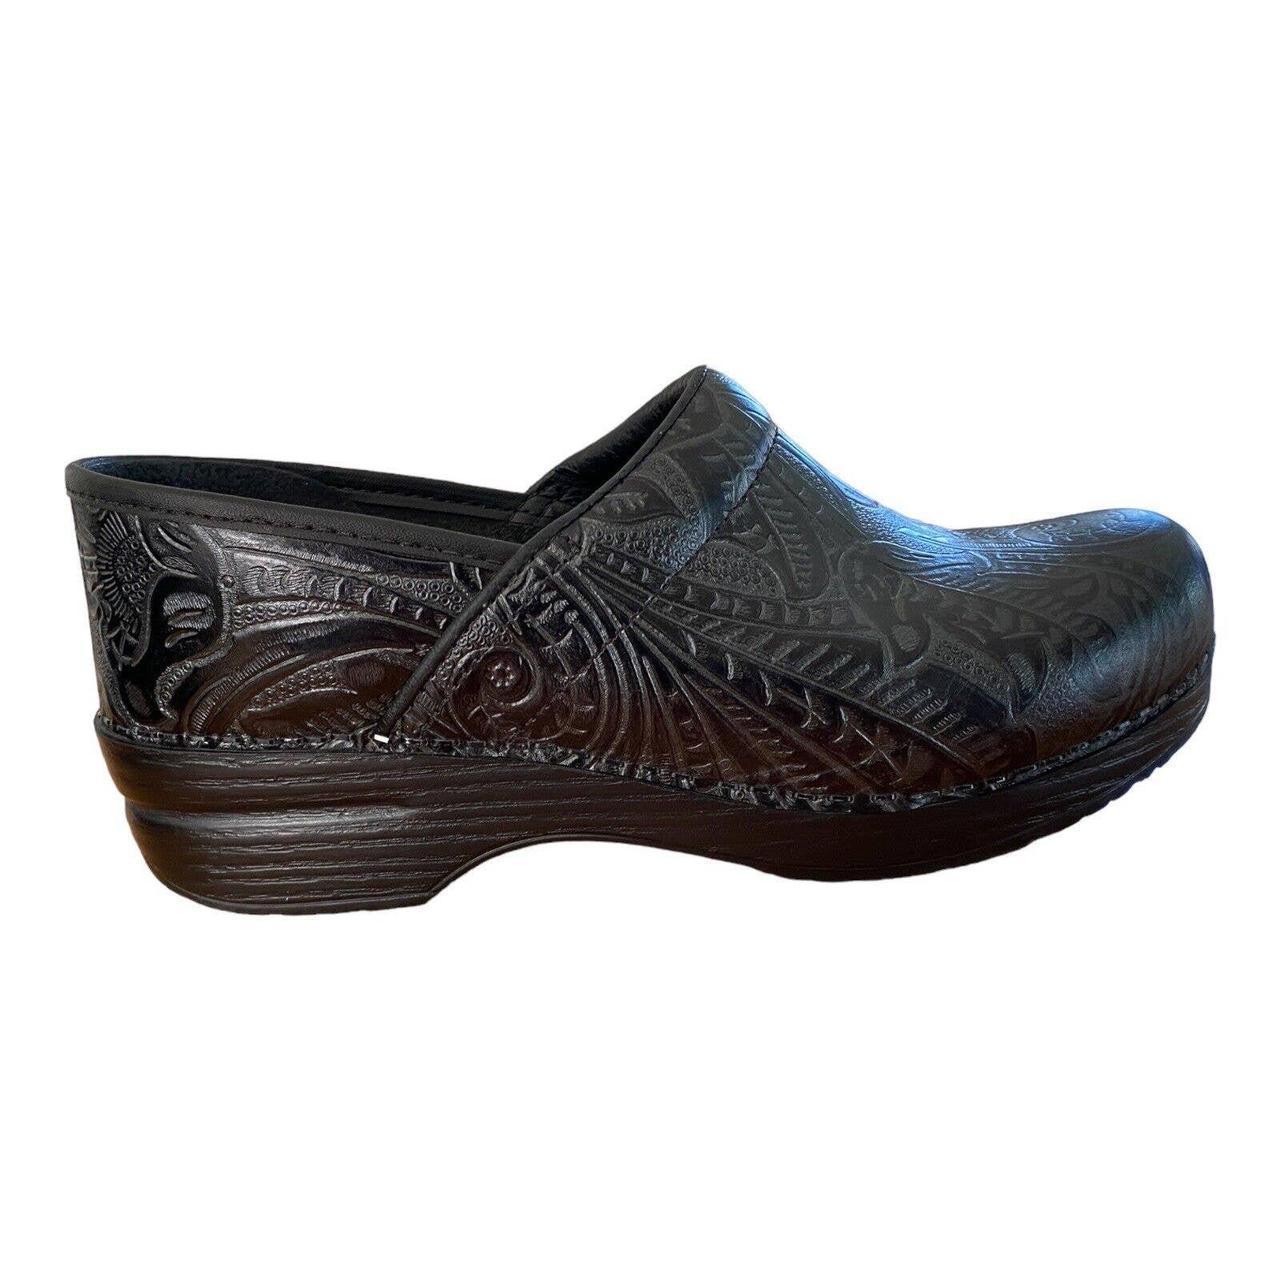 Dansko Black Gray Paisley Clogs Mules Comfort Shoes - Depop